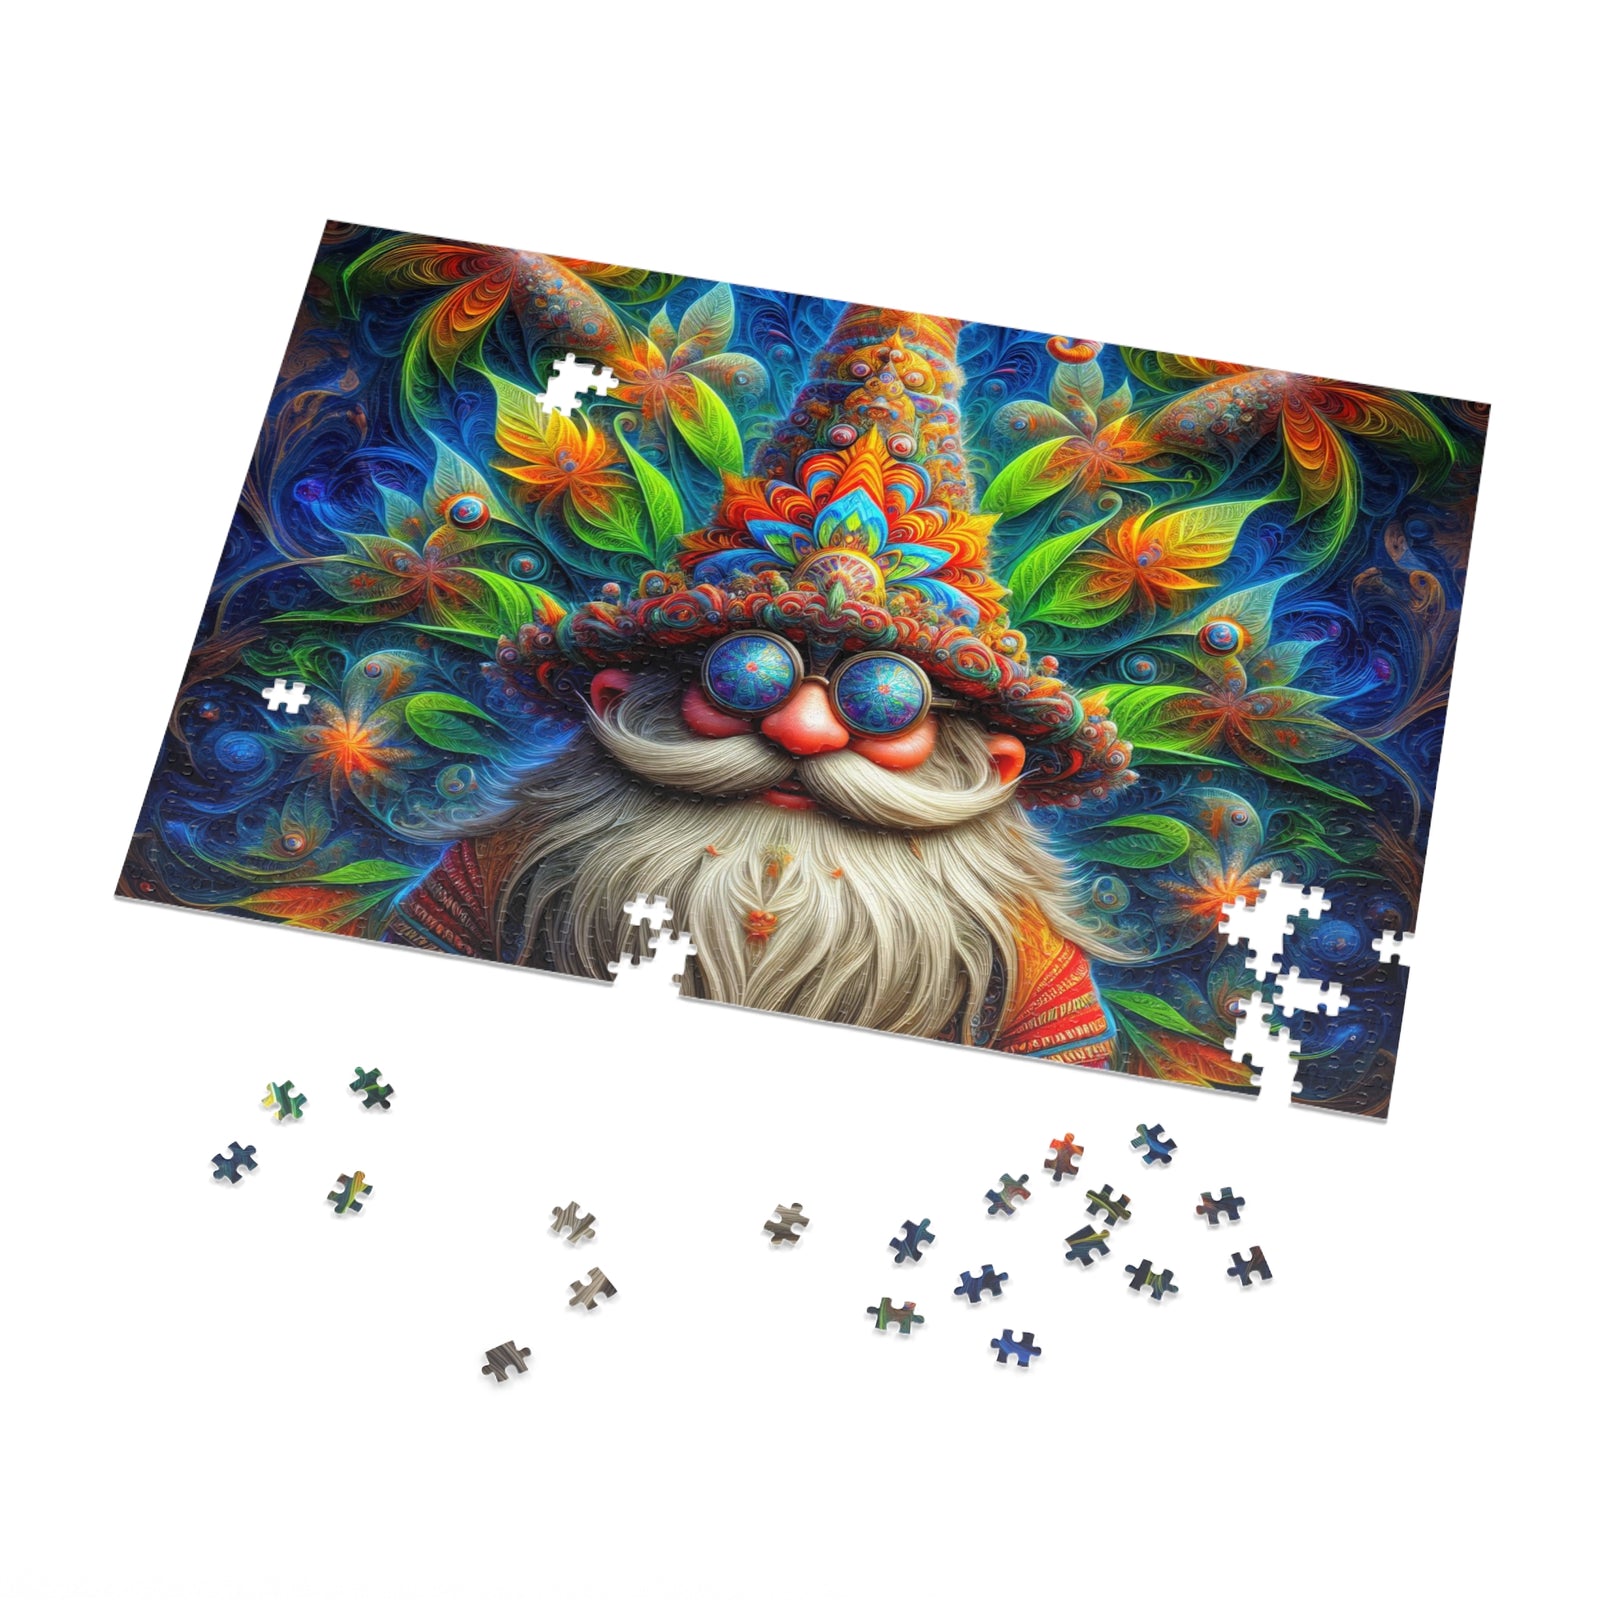 The Botanical Dreamweaver Jigsaw Puzzle